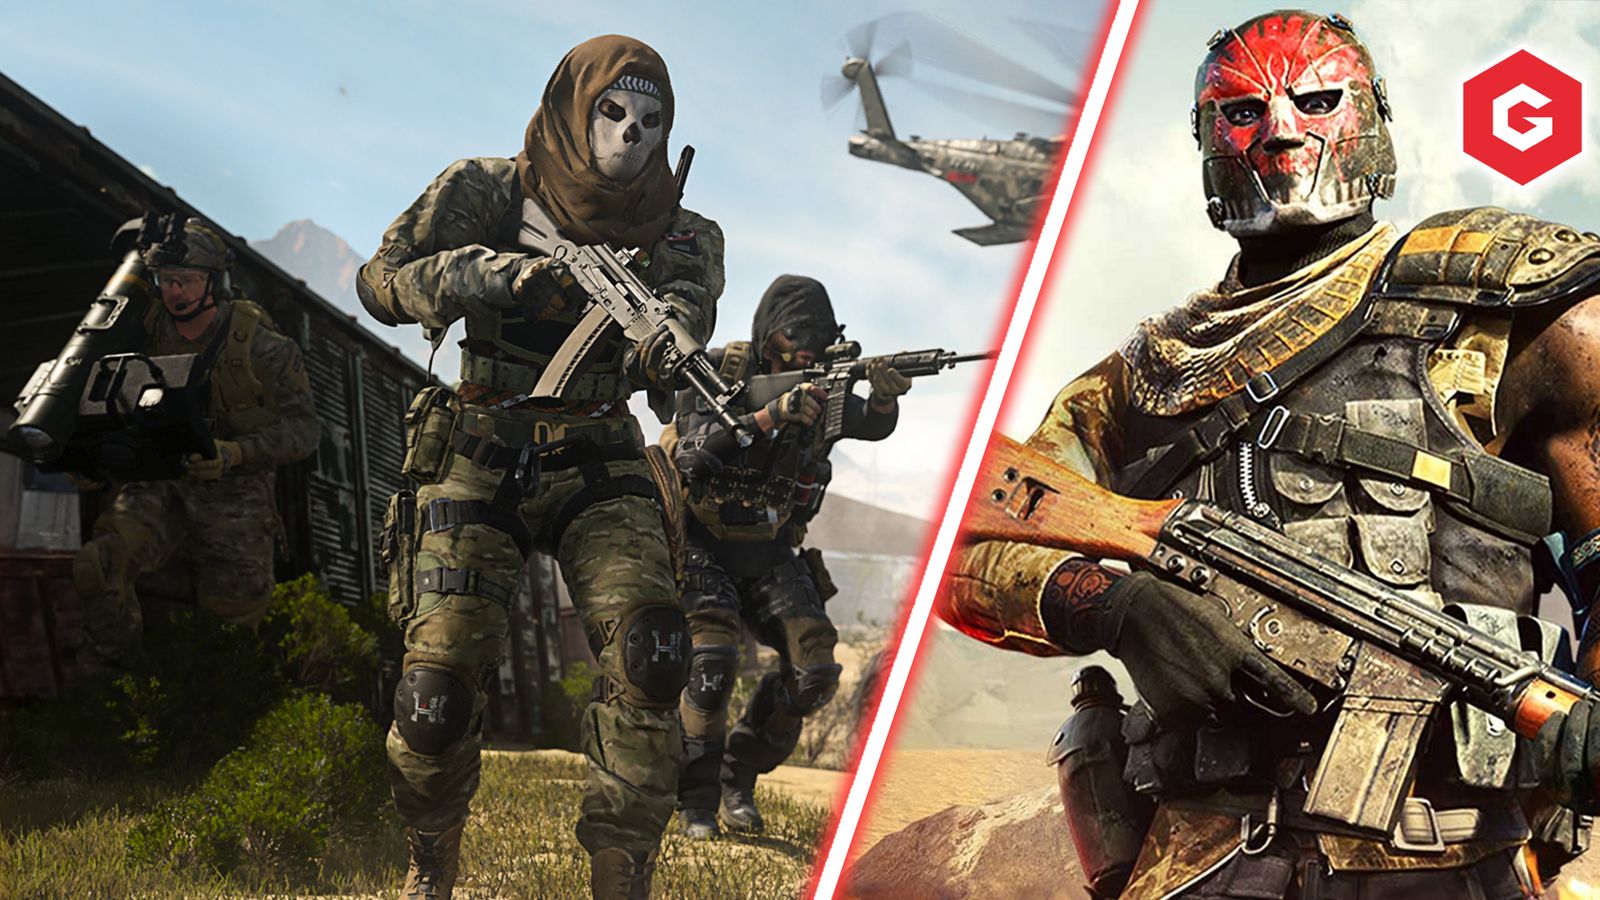 Image showing Warzone players holding guns